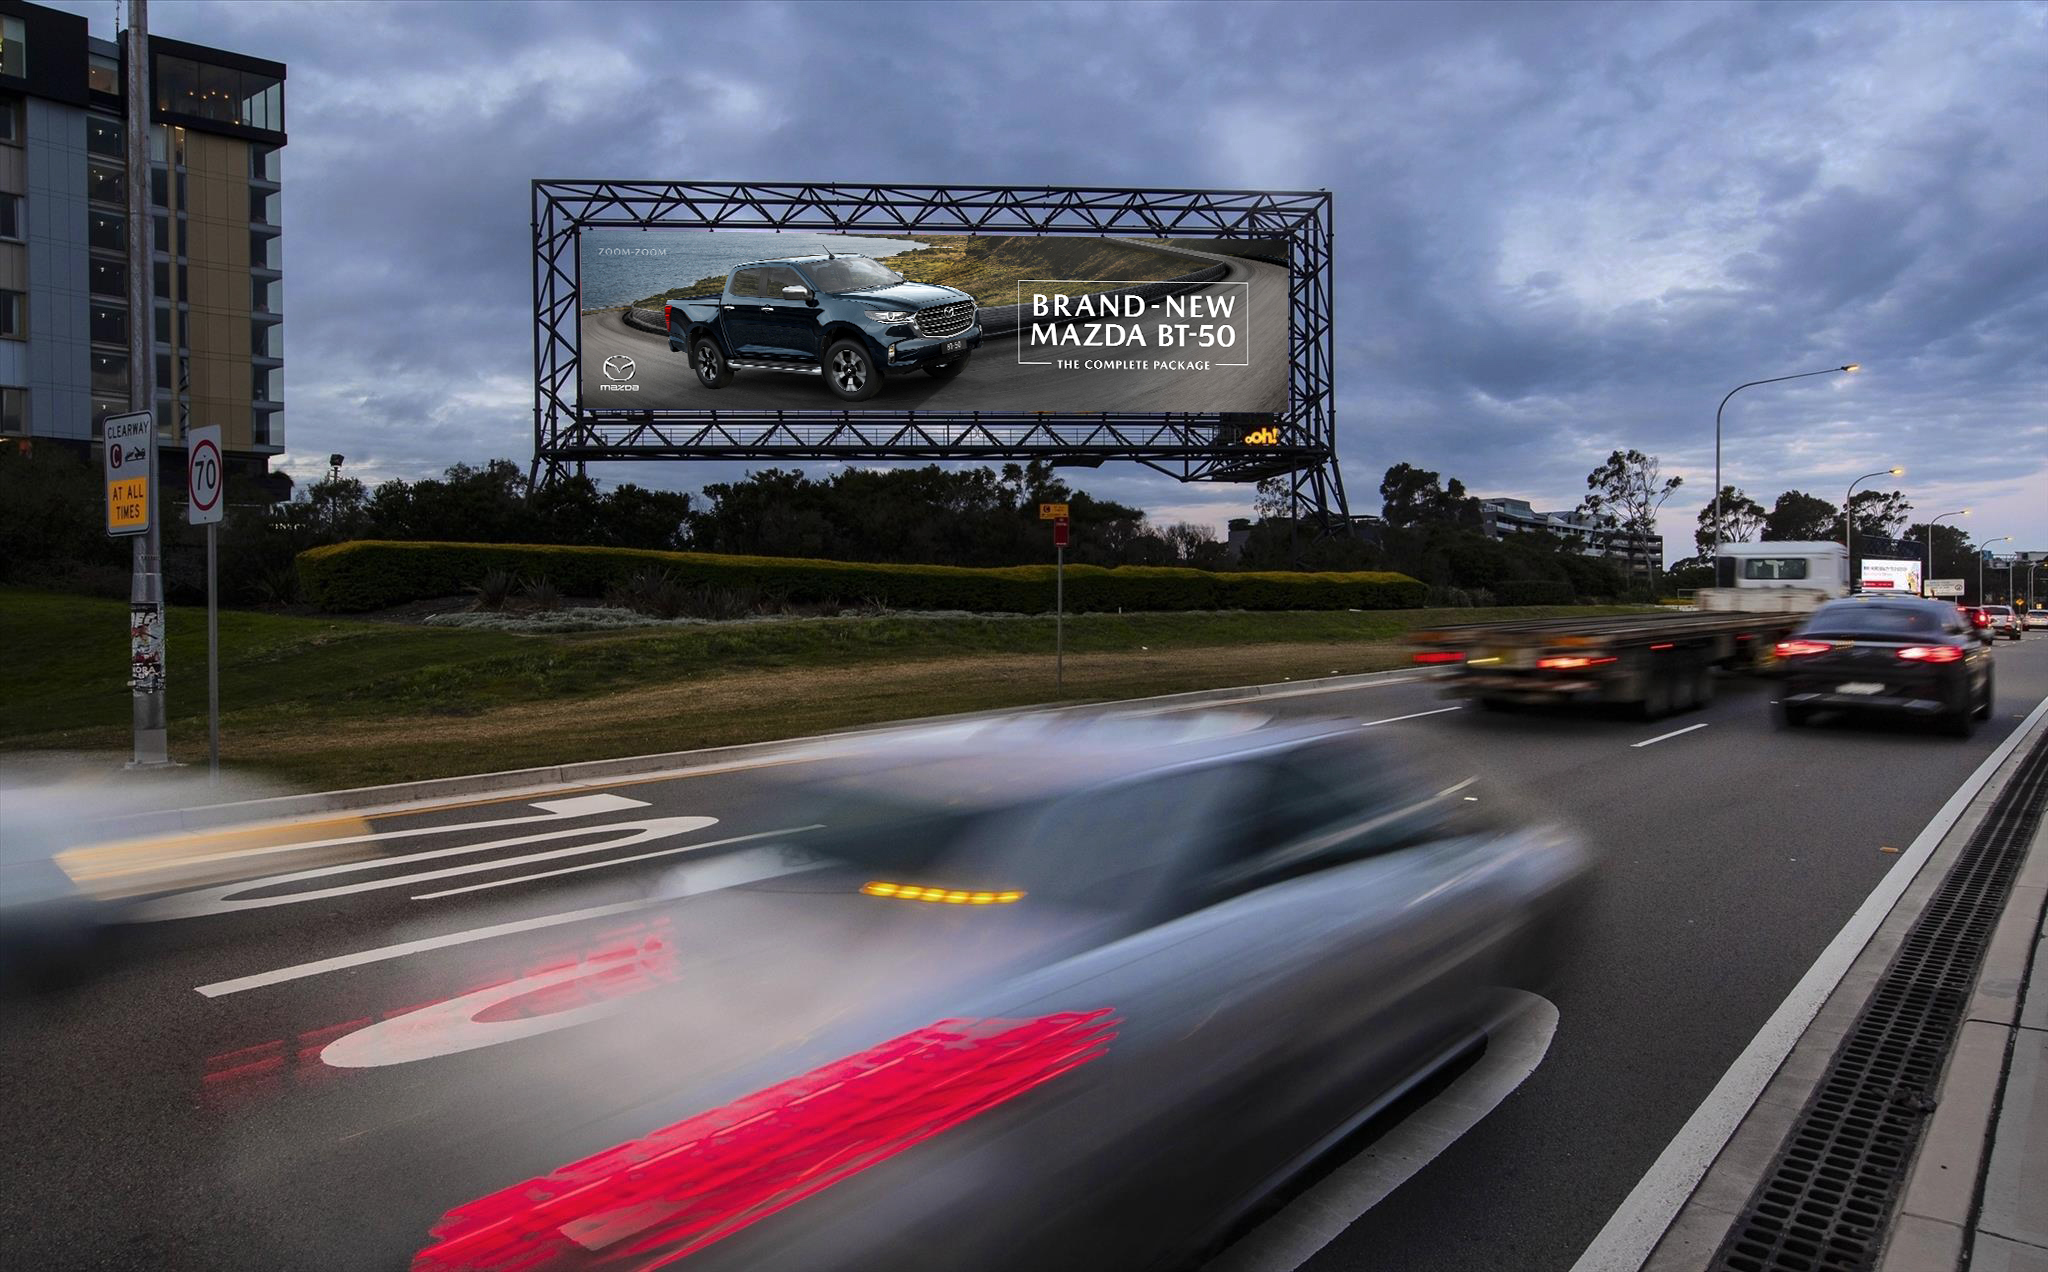 Mazda billboard advertising on road near airport